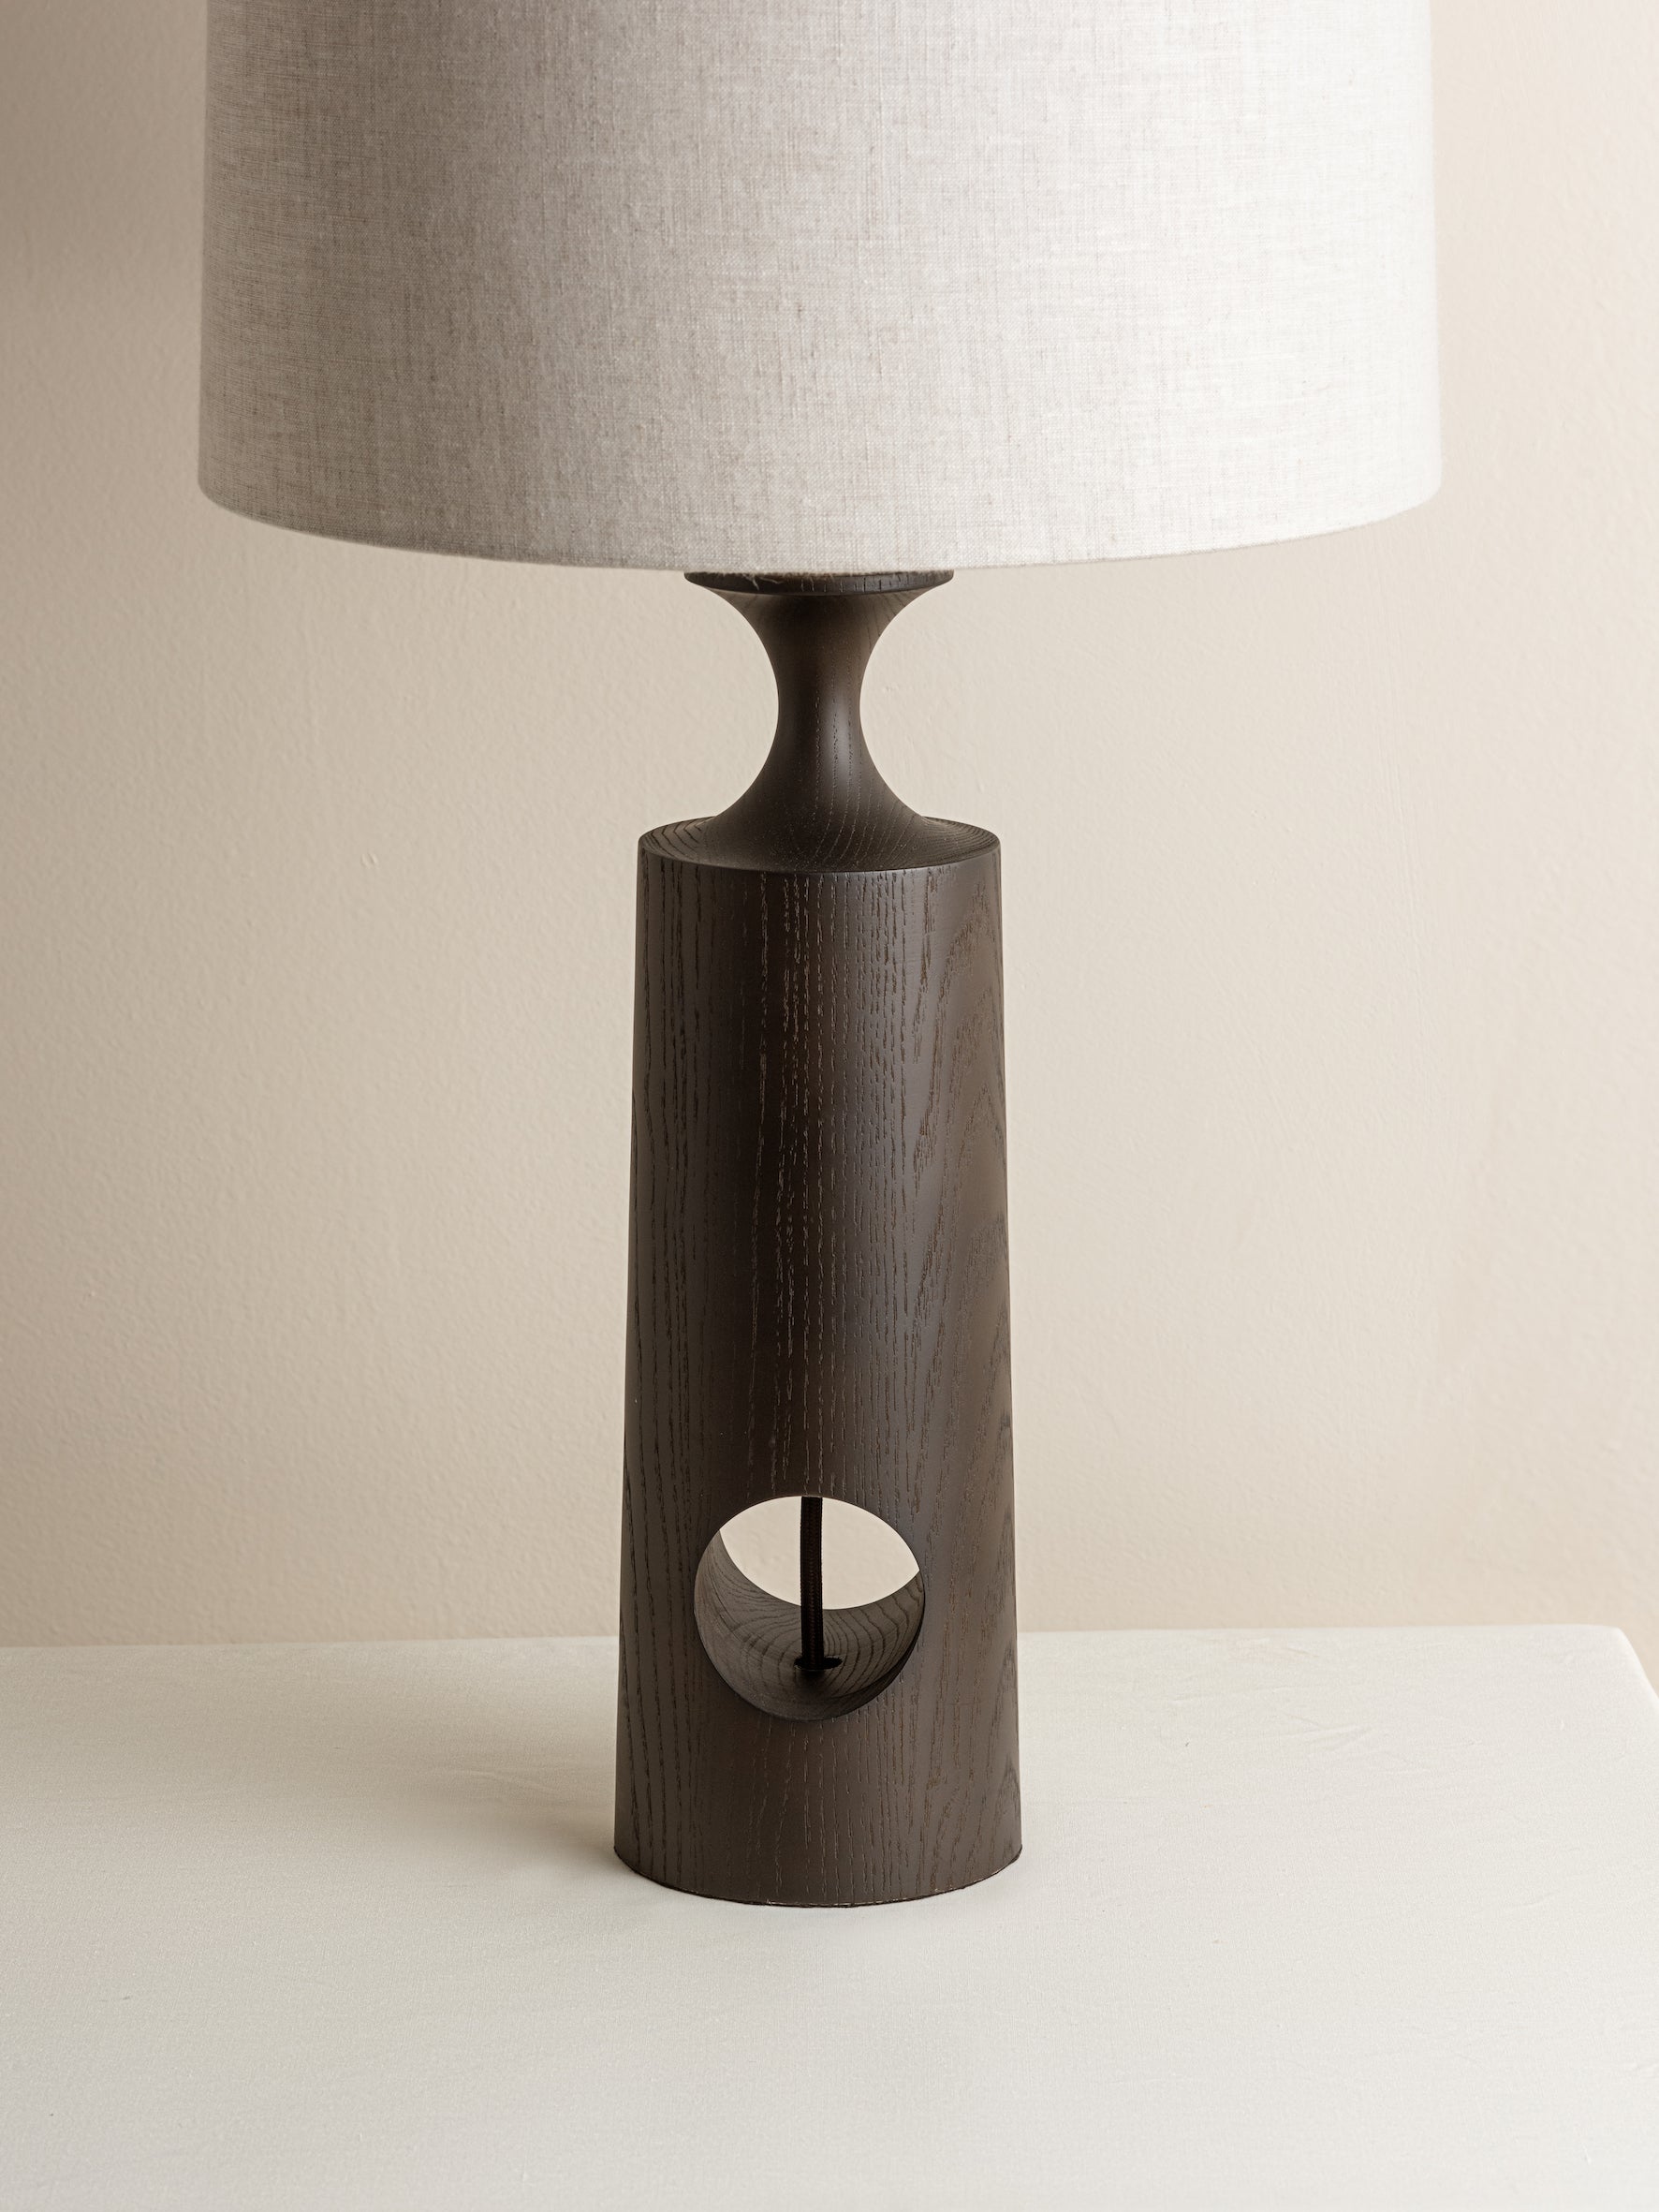 Morton - dark wood and linen table lamp | Table Lamp | Lights & Lamps Inc | Modern Affordable Designer Lighting | USA